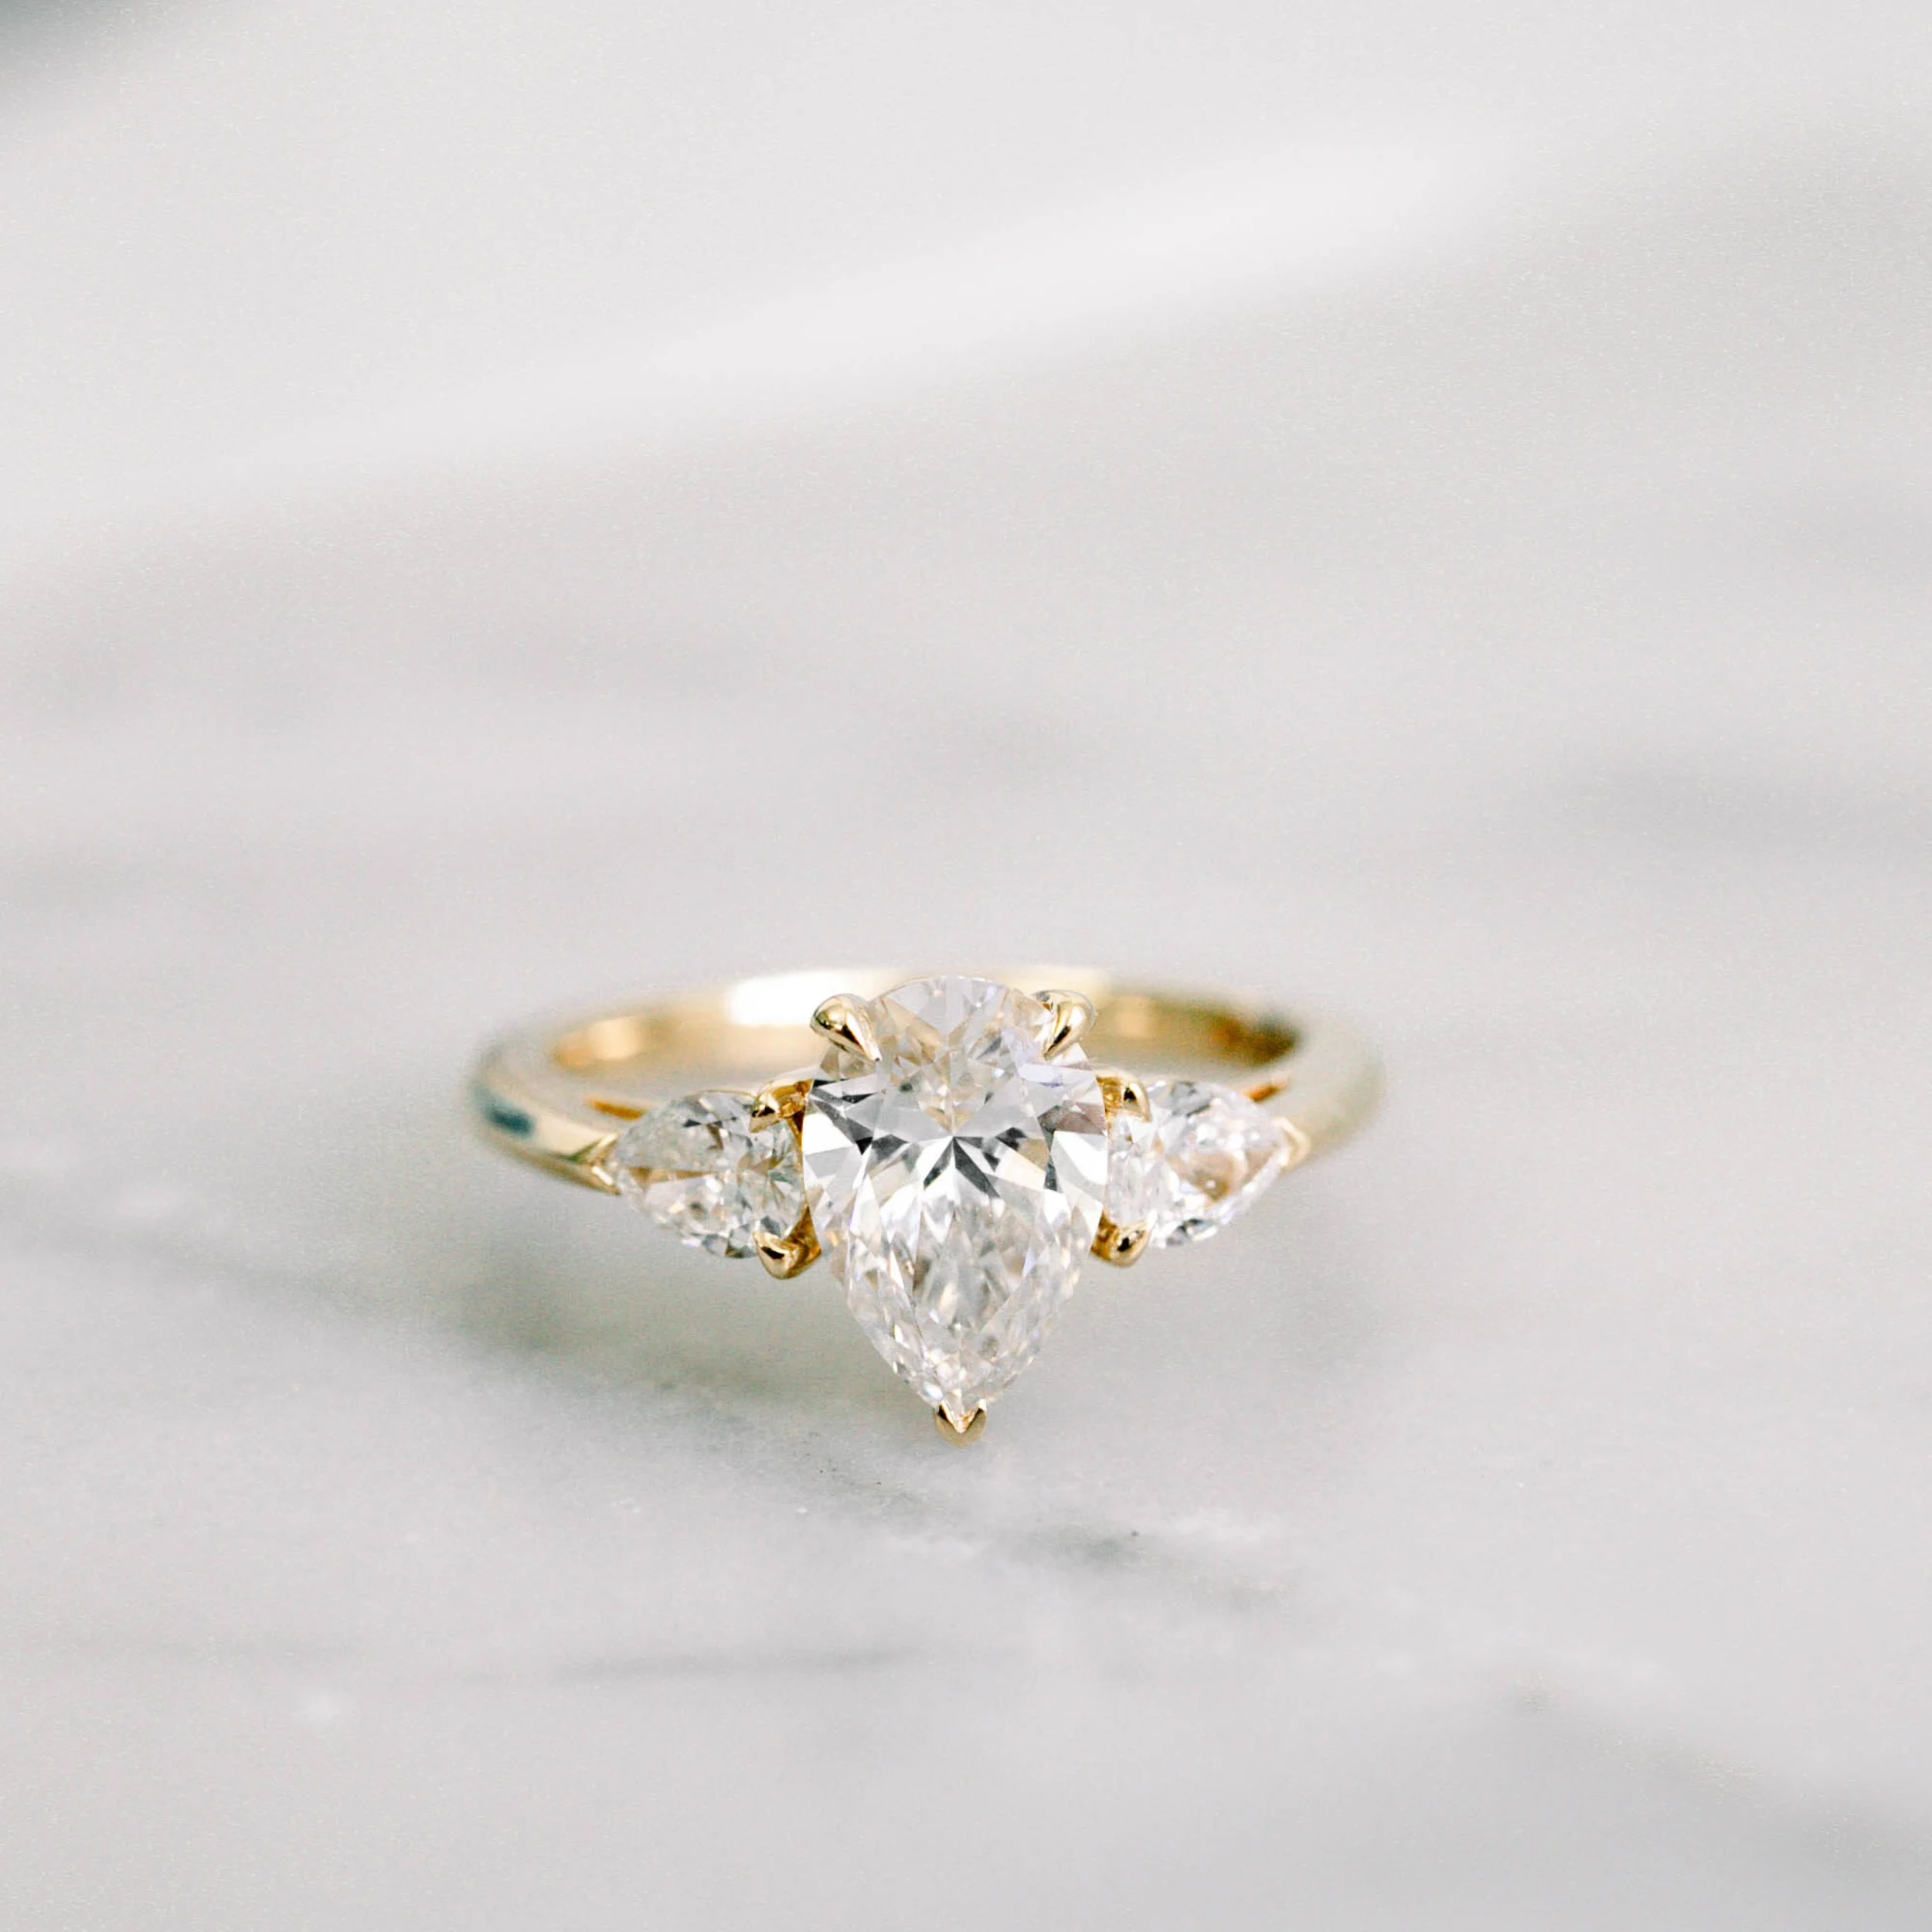 18k yellow gold three stone ring featuring pear shape lab grown diamonds